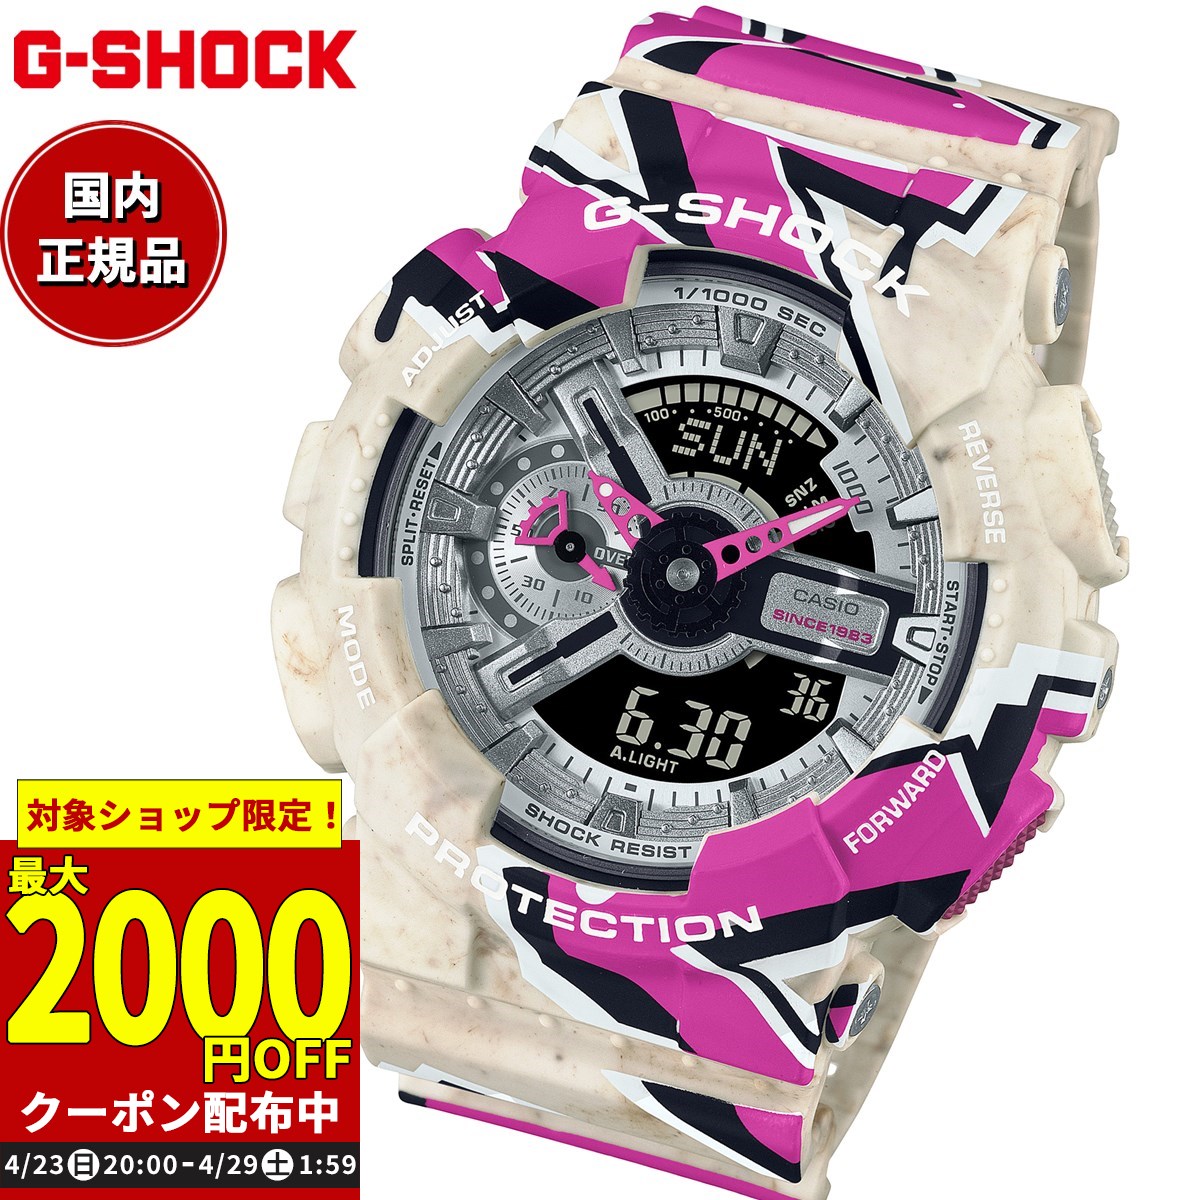 G-SHOCK analog-digital Casio G-Shock CASIO limited model